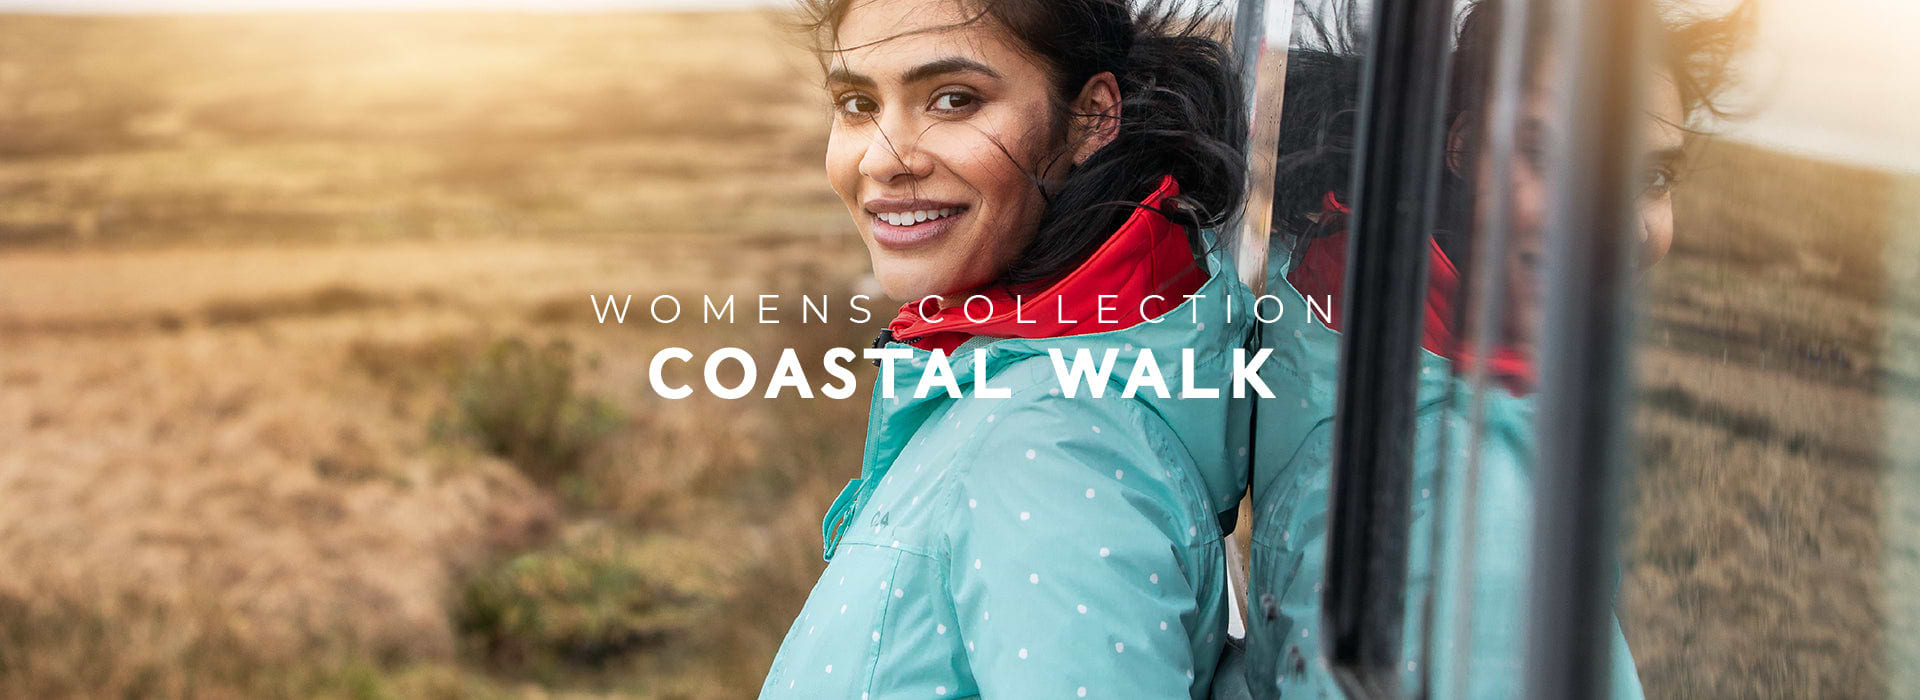 Coastal walk womens collection